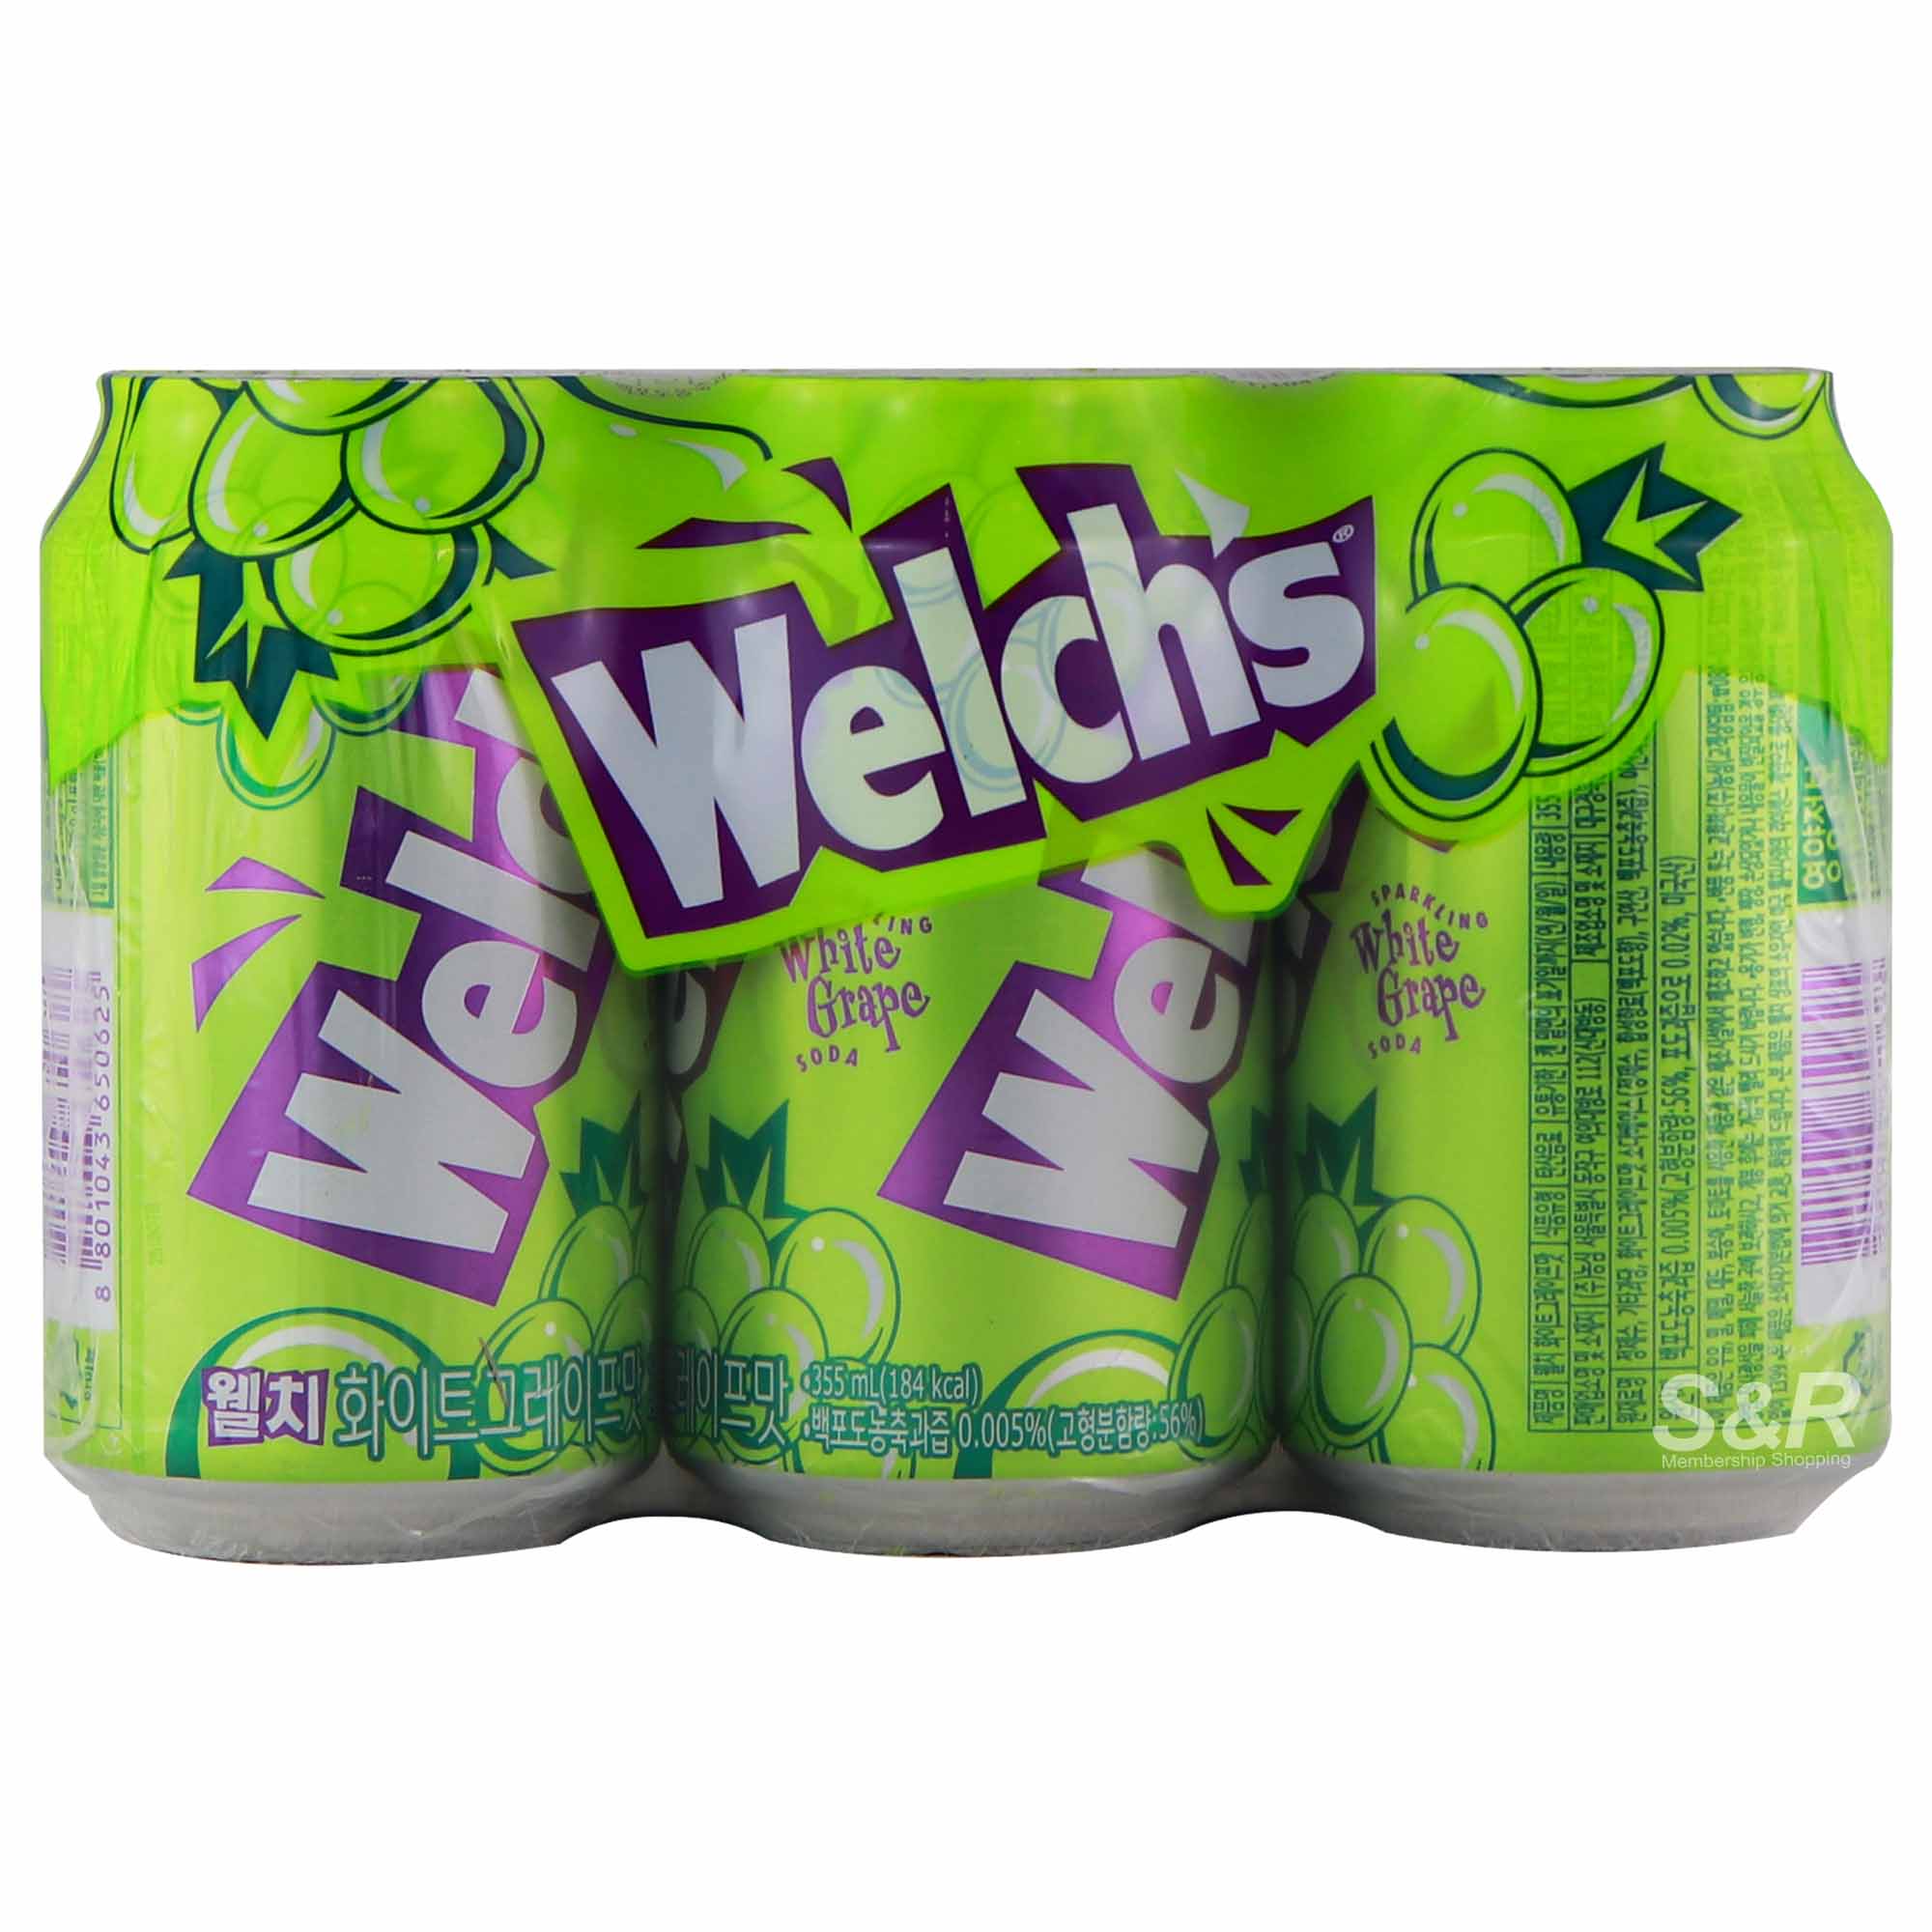 Welch's Sparkling White Grape Soda 6pcs